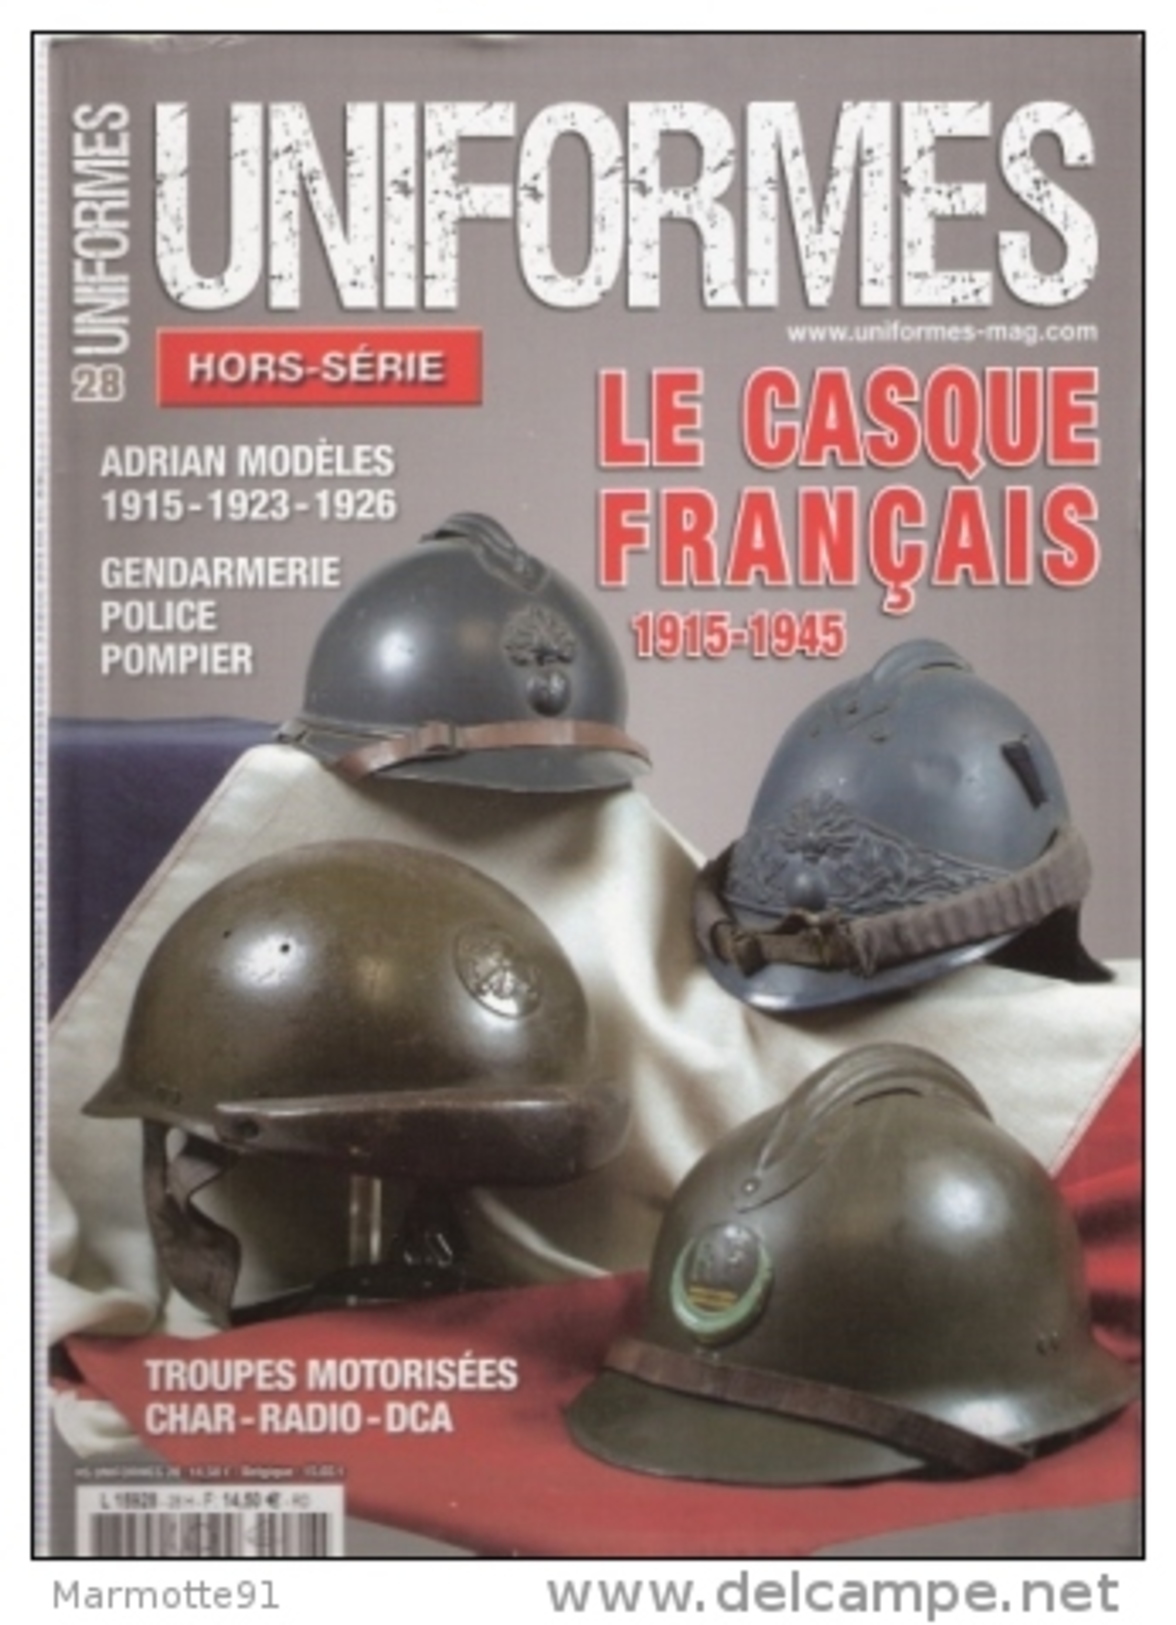 CASQUE FRANCAIS 1914 1945 ADRIAN  UNIFORMES HORS SERIE 28 - Casques & Coiffures